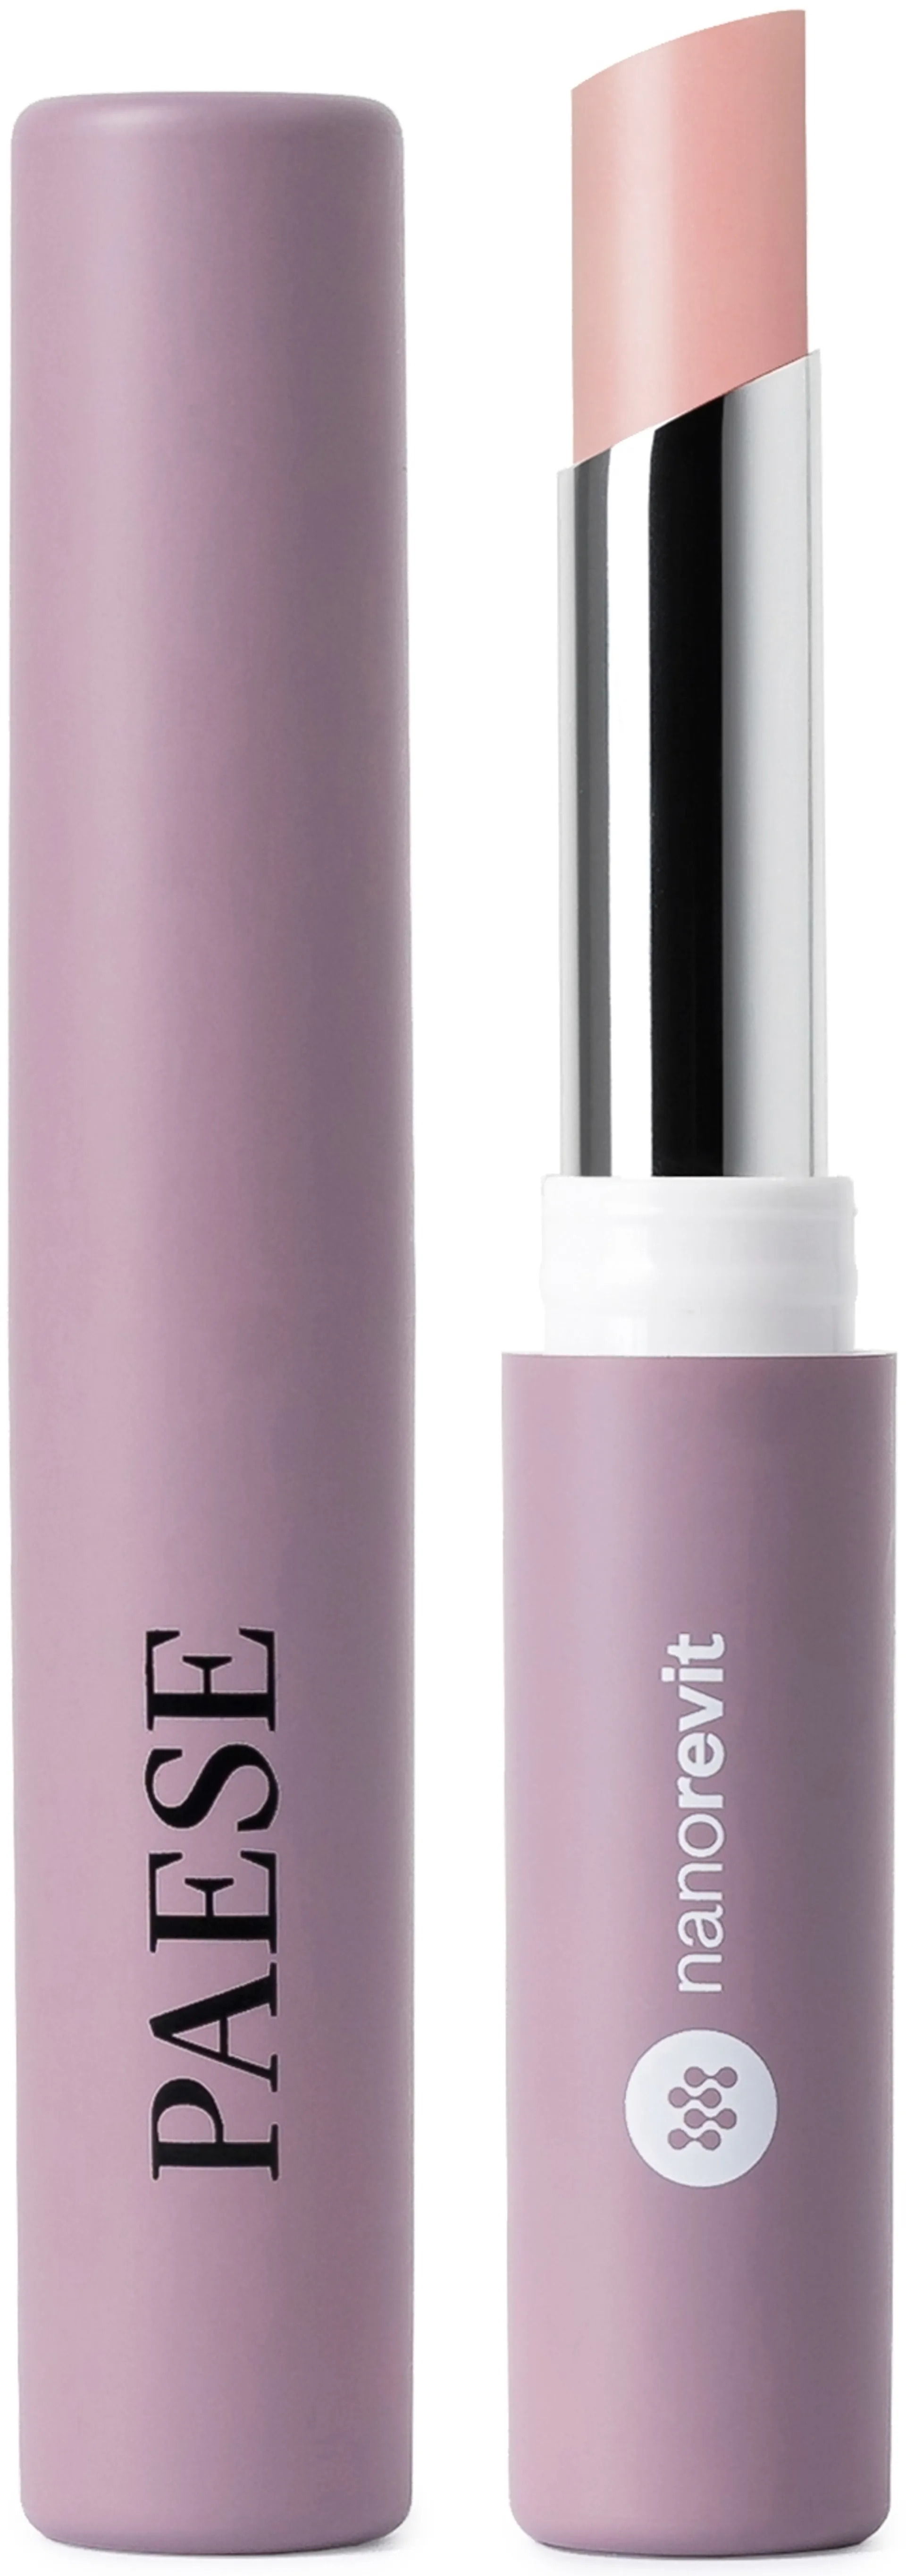 Paese Nanorevit lip care primer huultenpohjustus 40 light pink 2,2g - 1